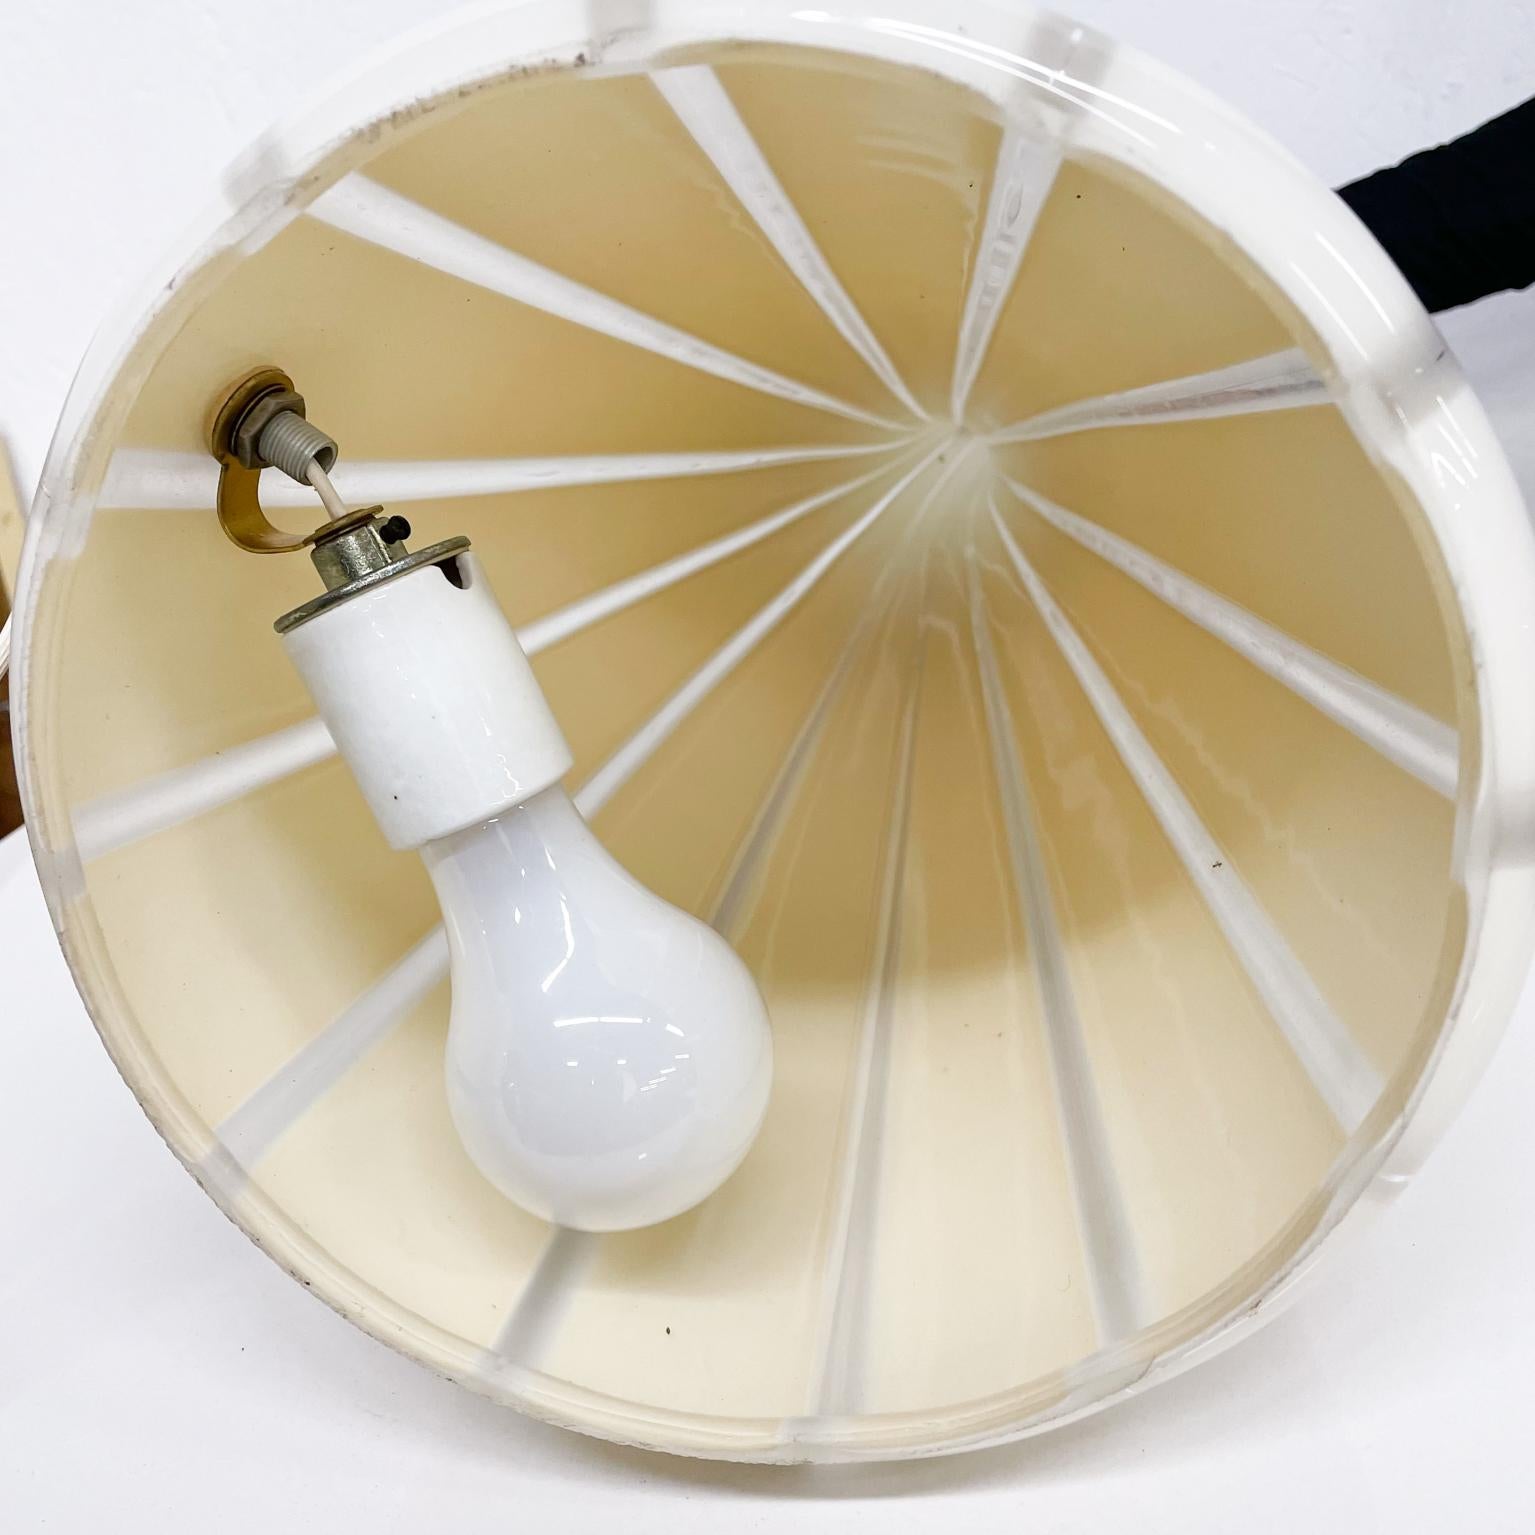 Seguso Vetri d'Arte Milky White Swirled Murano Glass Table Lamp, Italy, 1960s For Sale 2